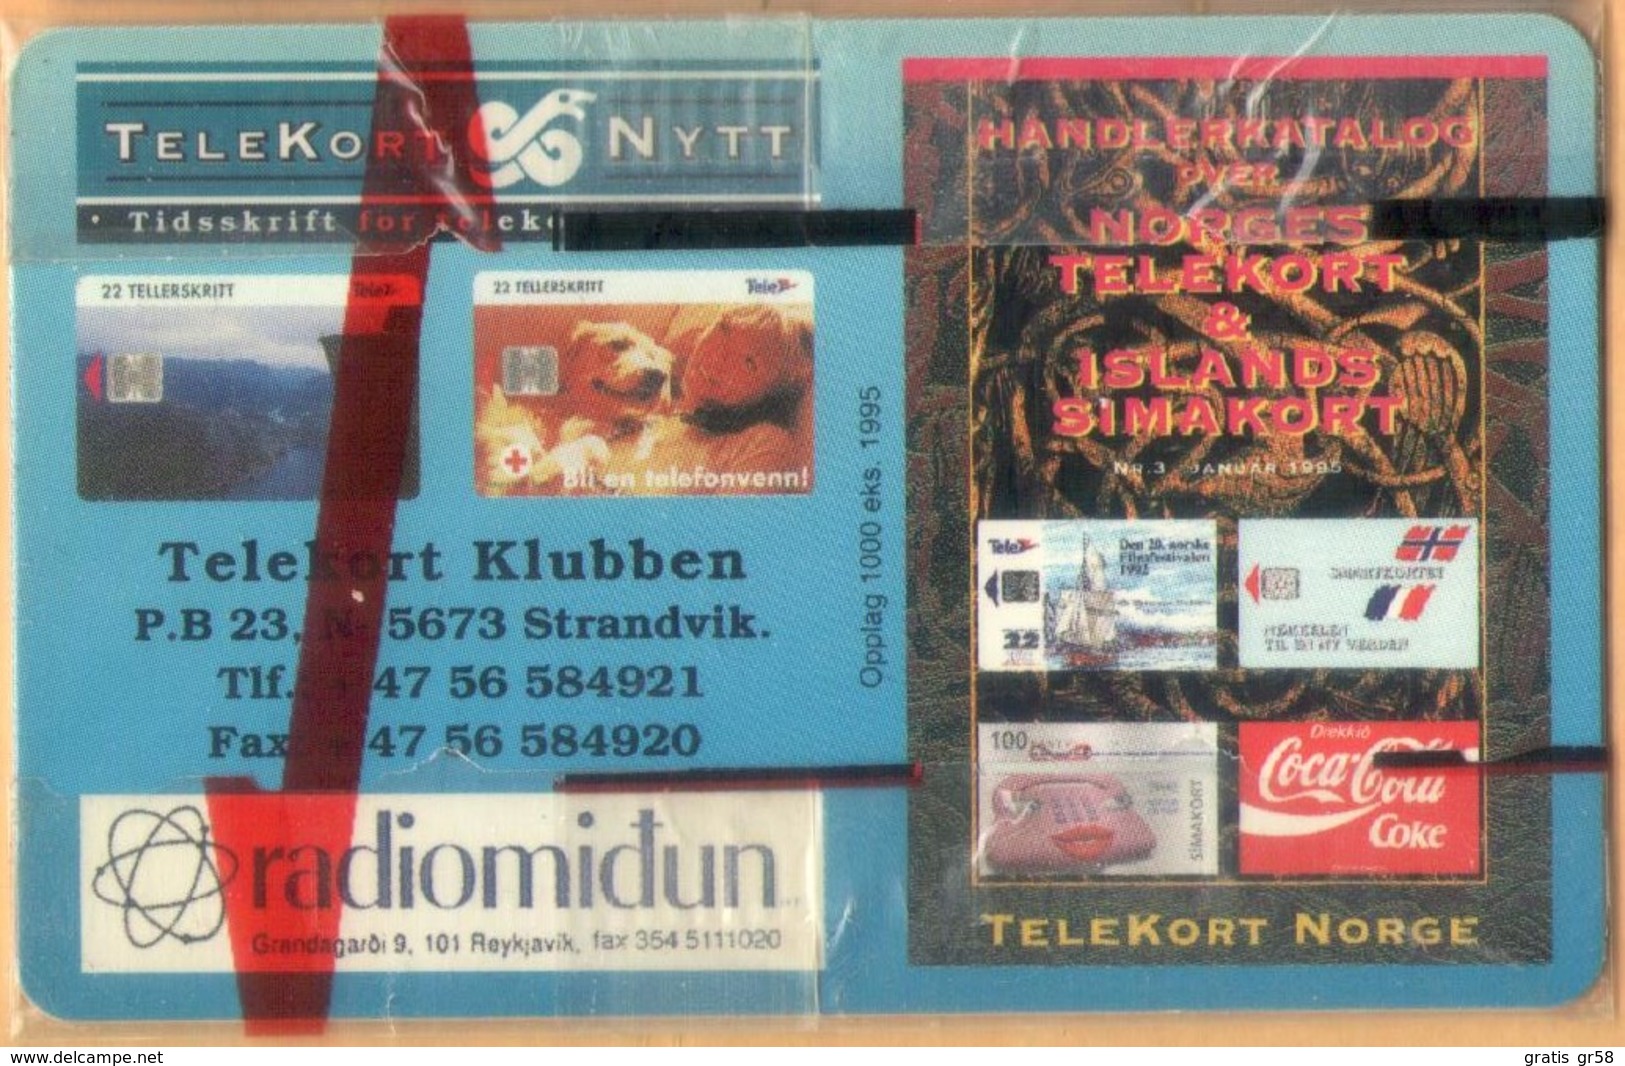 Iceland - ICE-P-1, Radomidun, TeleKort Norge - Astronaut, Coca Cola, 100U, 1,000ex, 1995, Mint NSB - Iceland